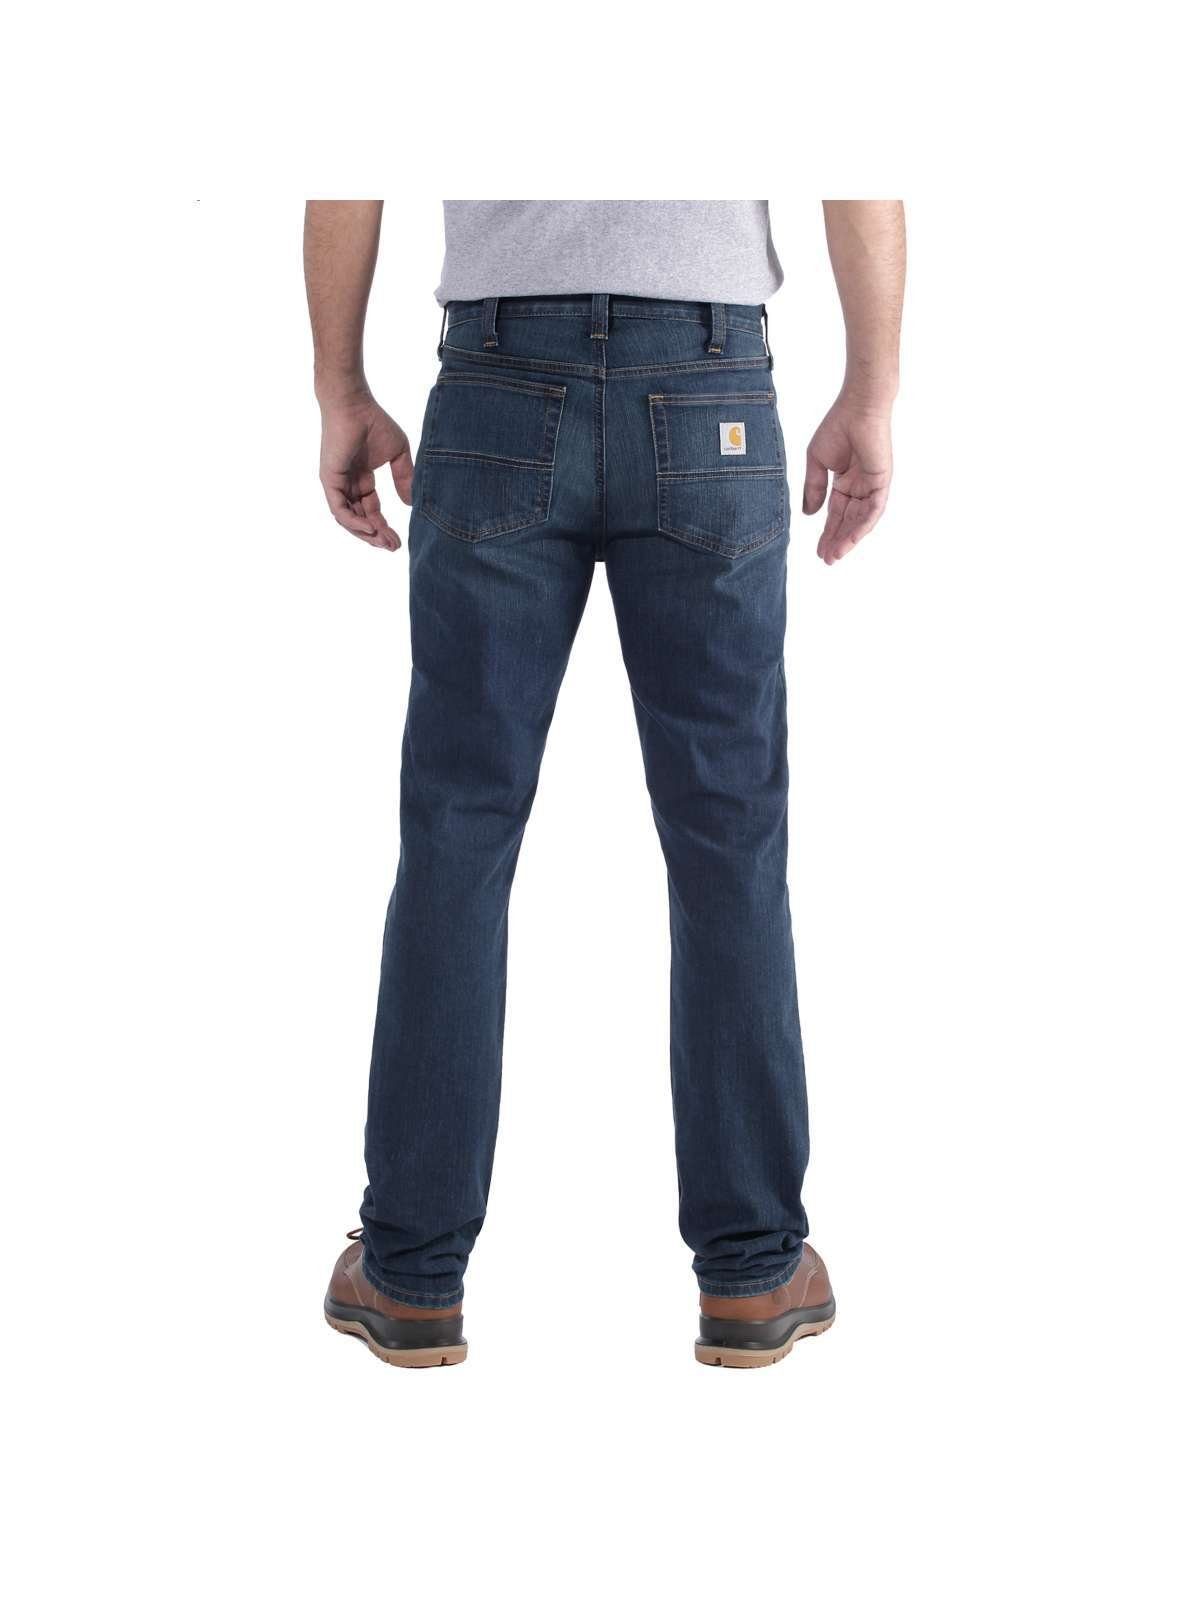 Carhartt Arbeitshose dunkelblau Flex Jeans Carhartt superior Rugged